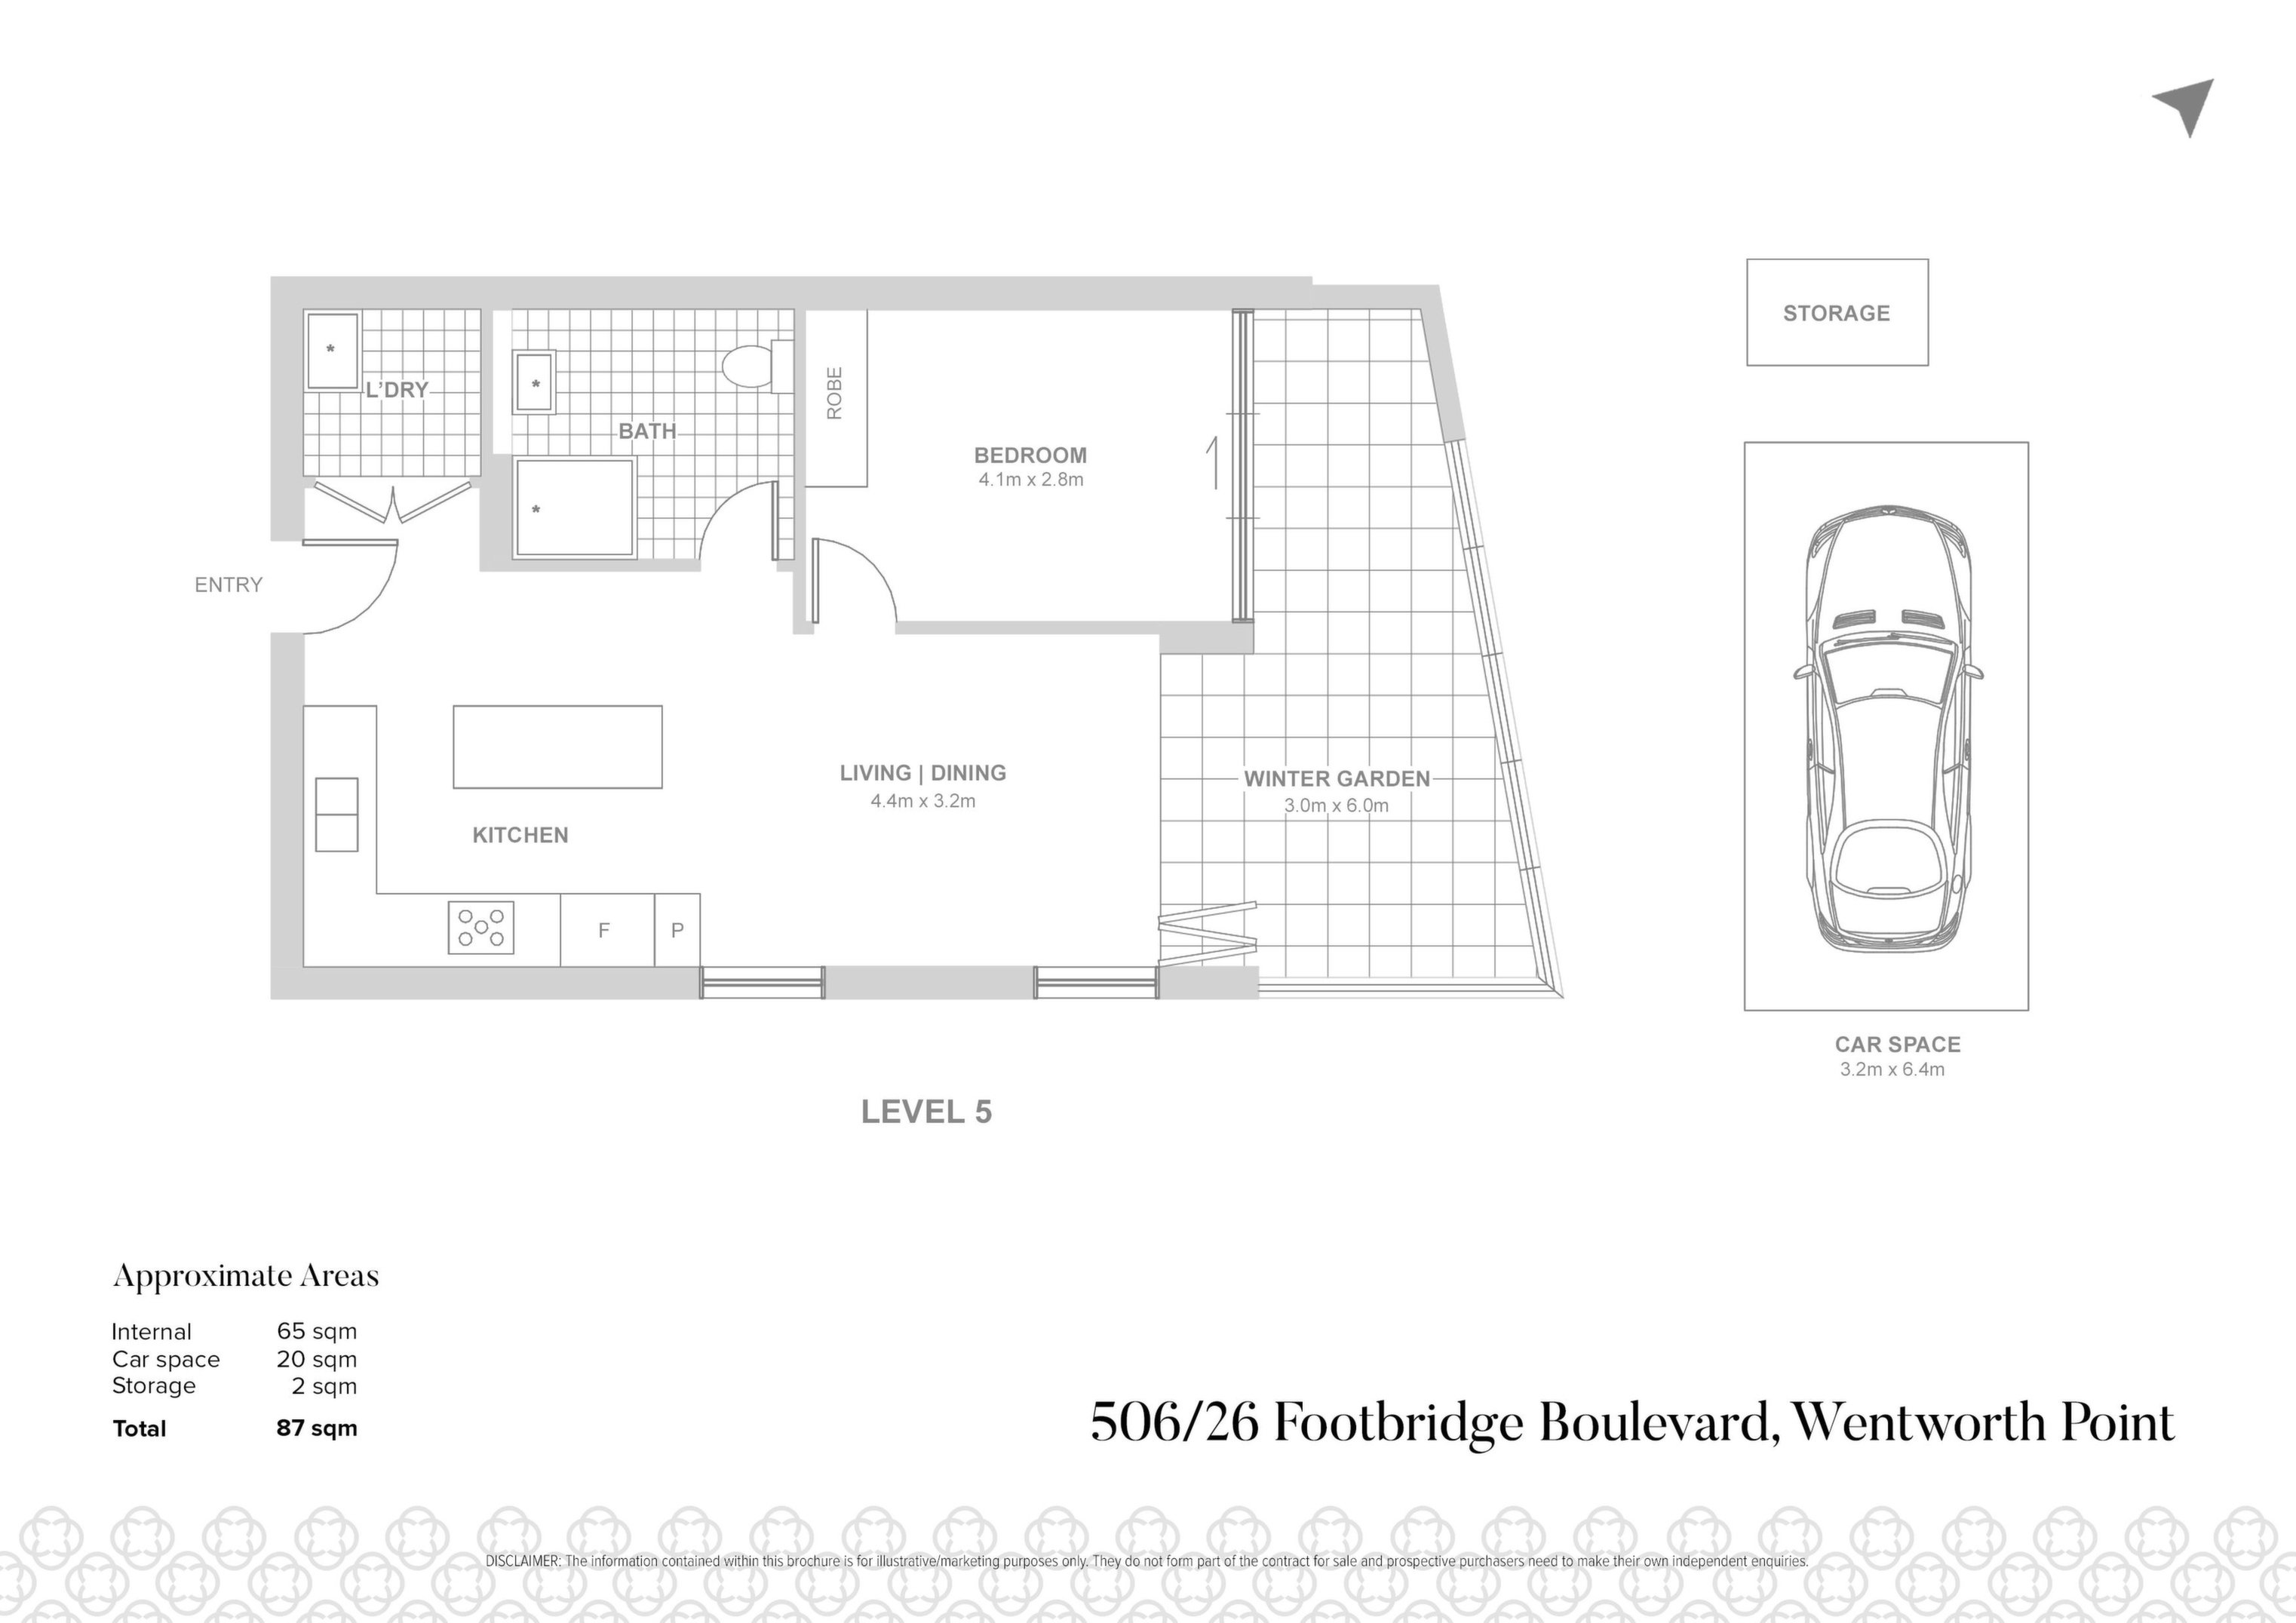 506/26 Footbridge Boulevard, Wentworth Point Sold by Chidiac Realty - floorplan